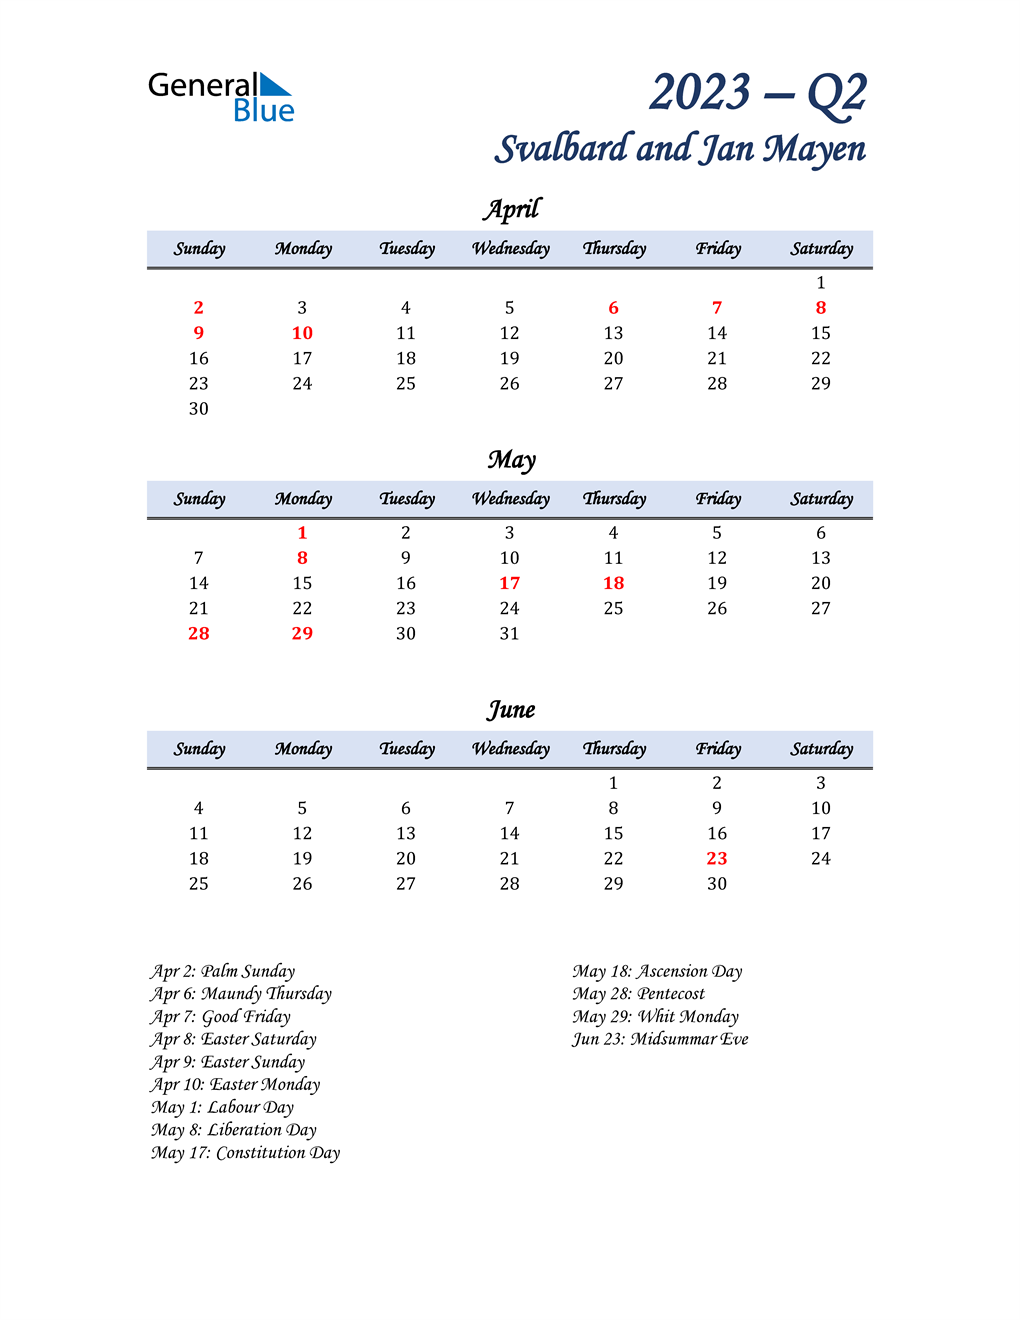  April, May, and June Calendar for Svalbard and Jan Mayen